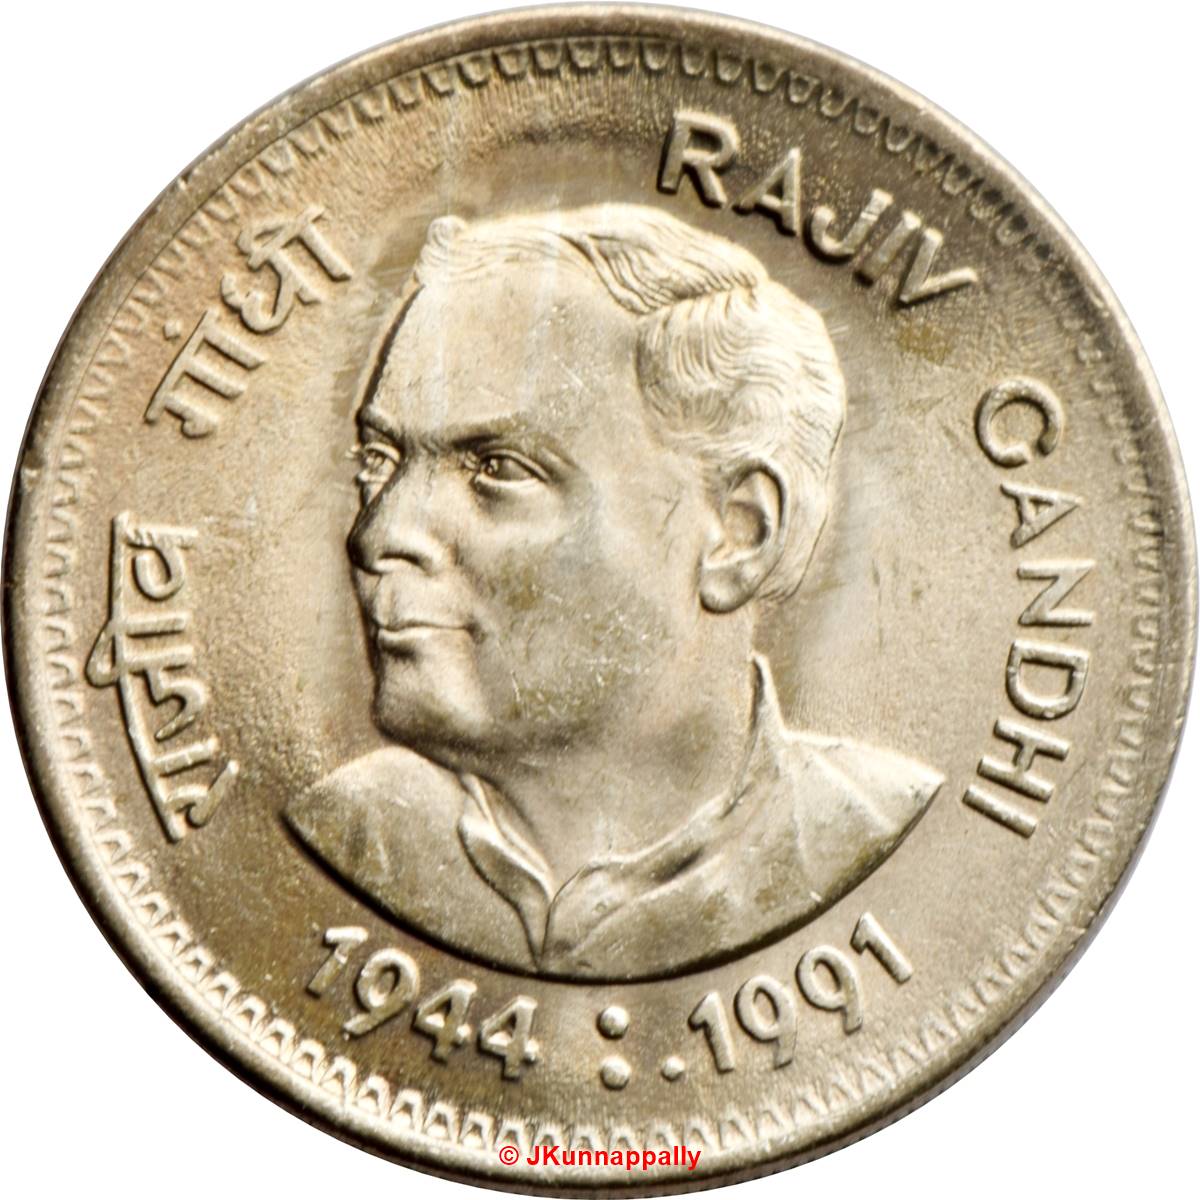 Old Coin & Rajiv gandhi 1 rupee by VTS Illam, Coimbatore